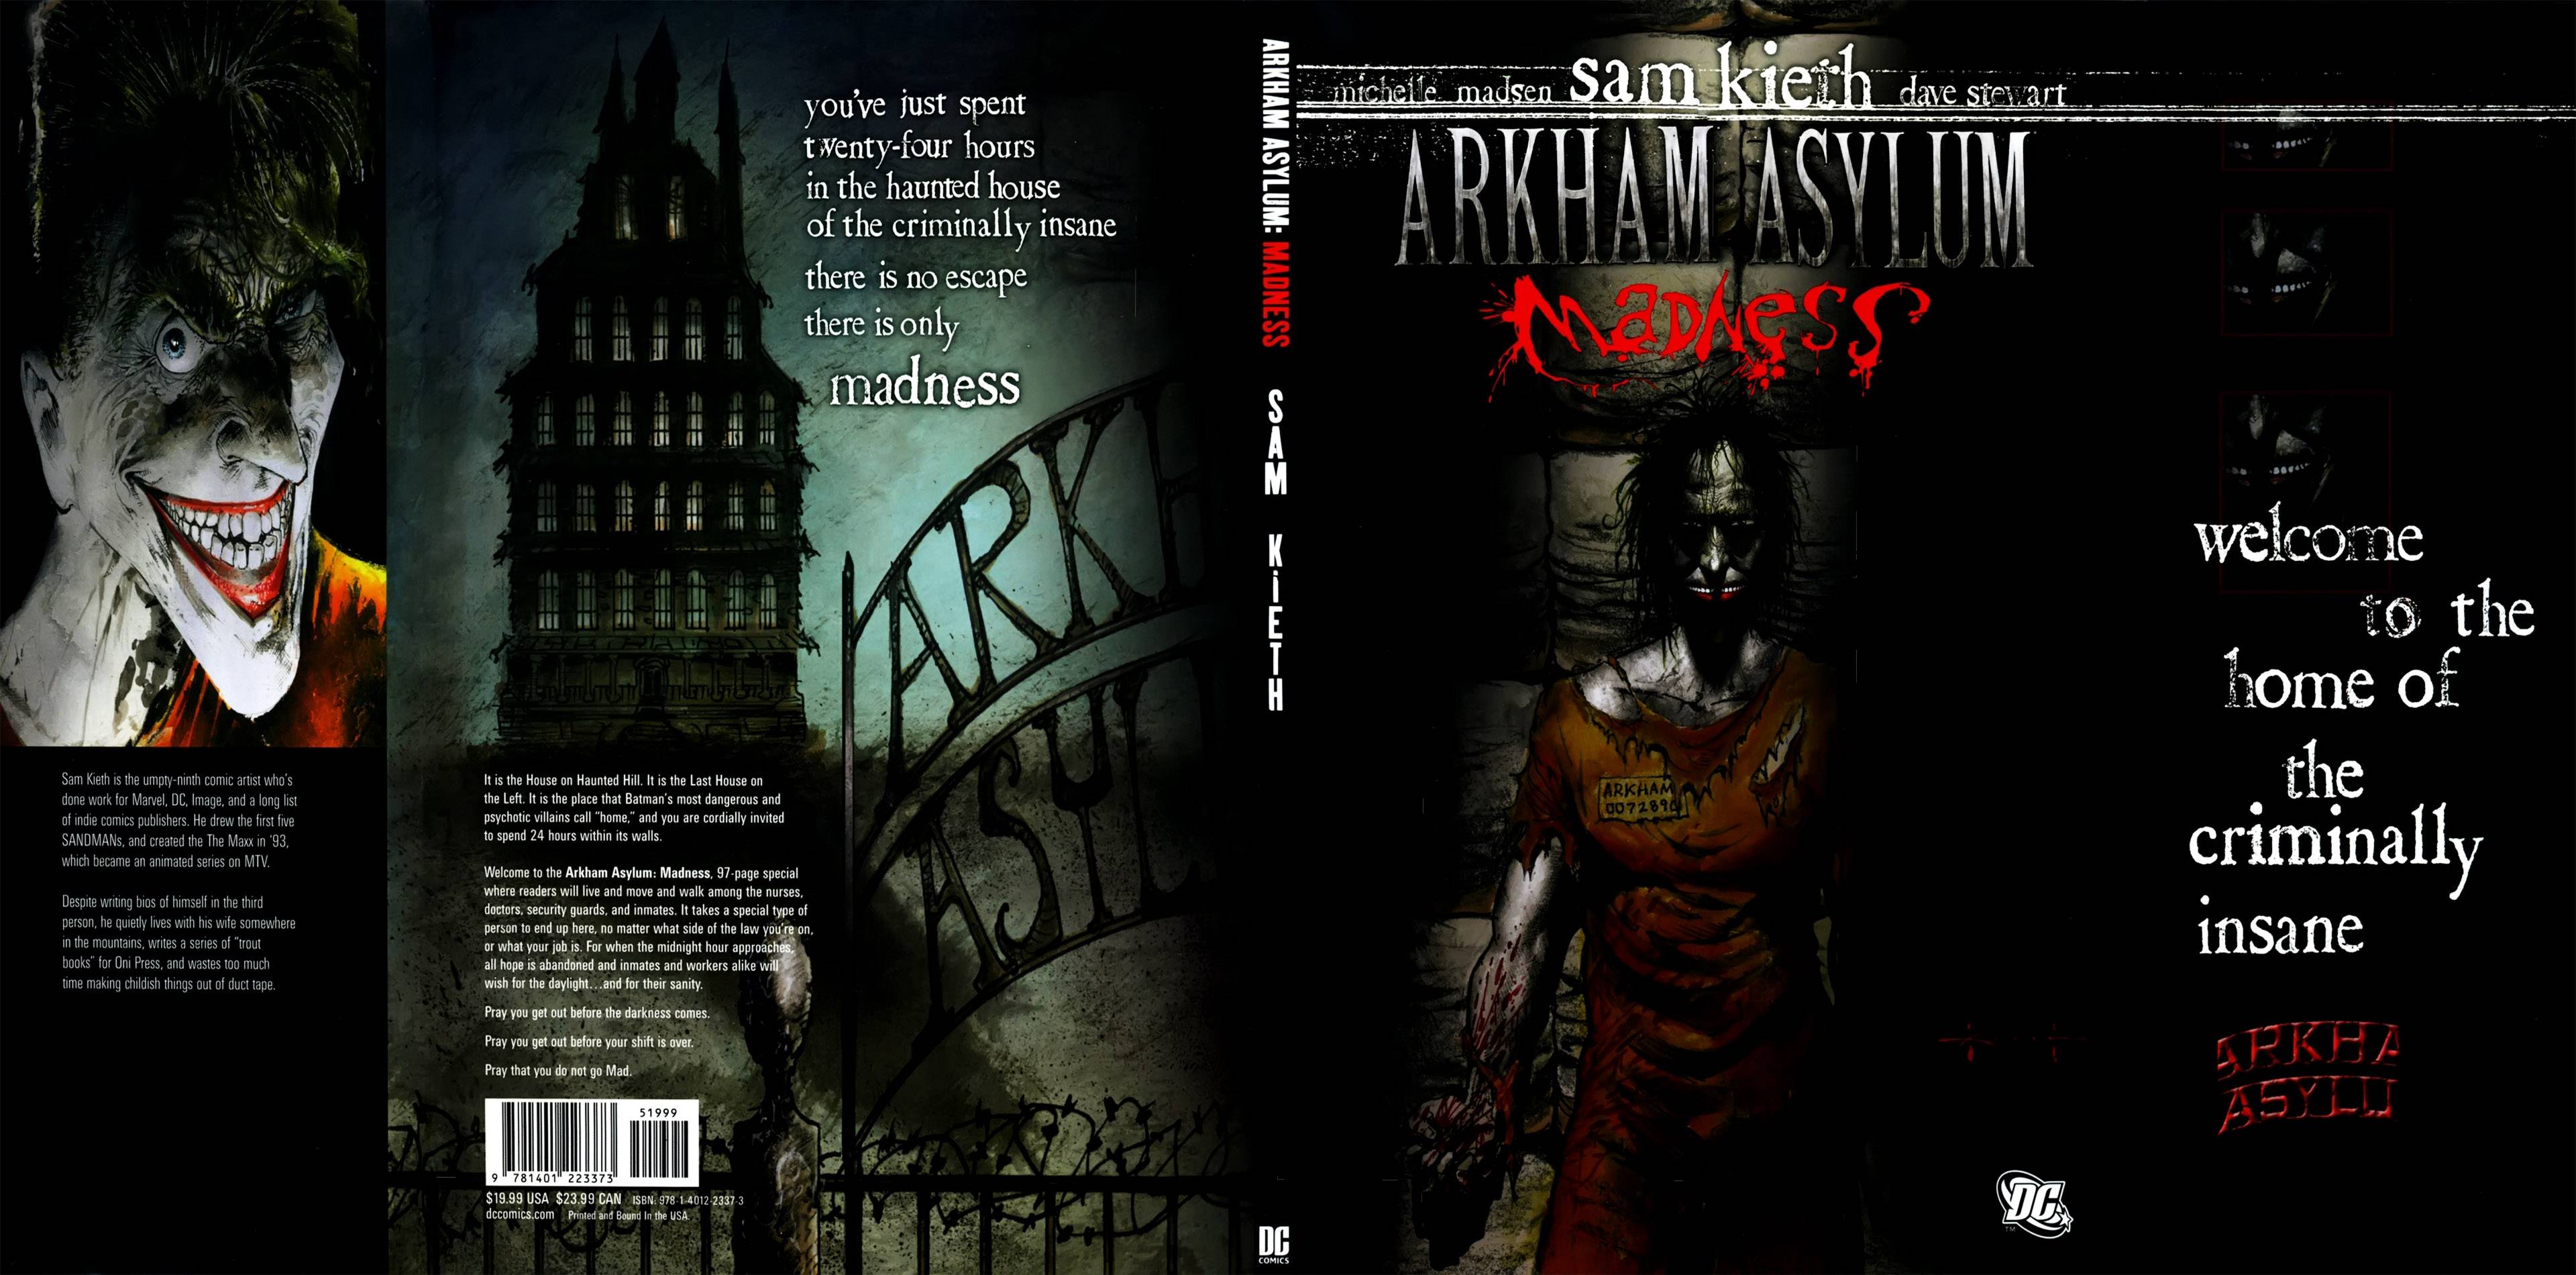 Arkham Asylum: Madness #1